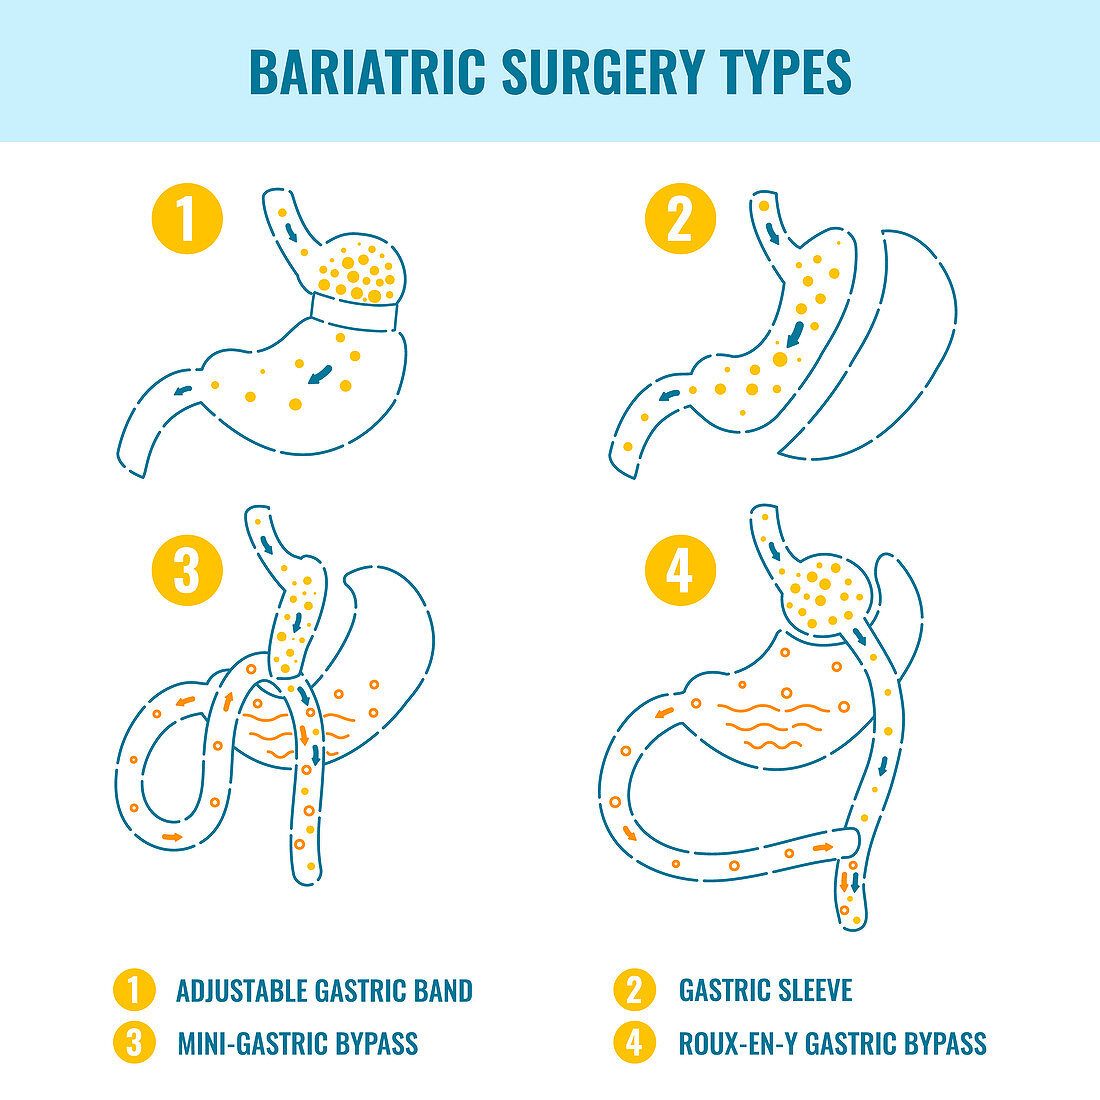 Bariatric surgery types, illustration